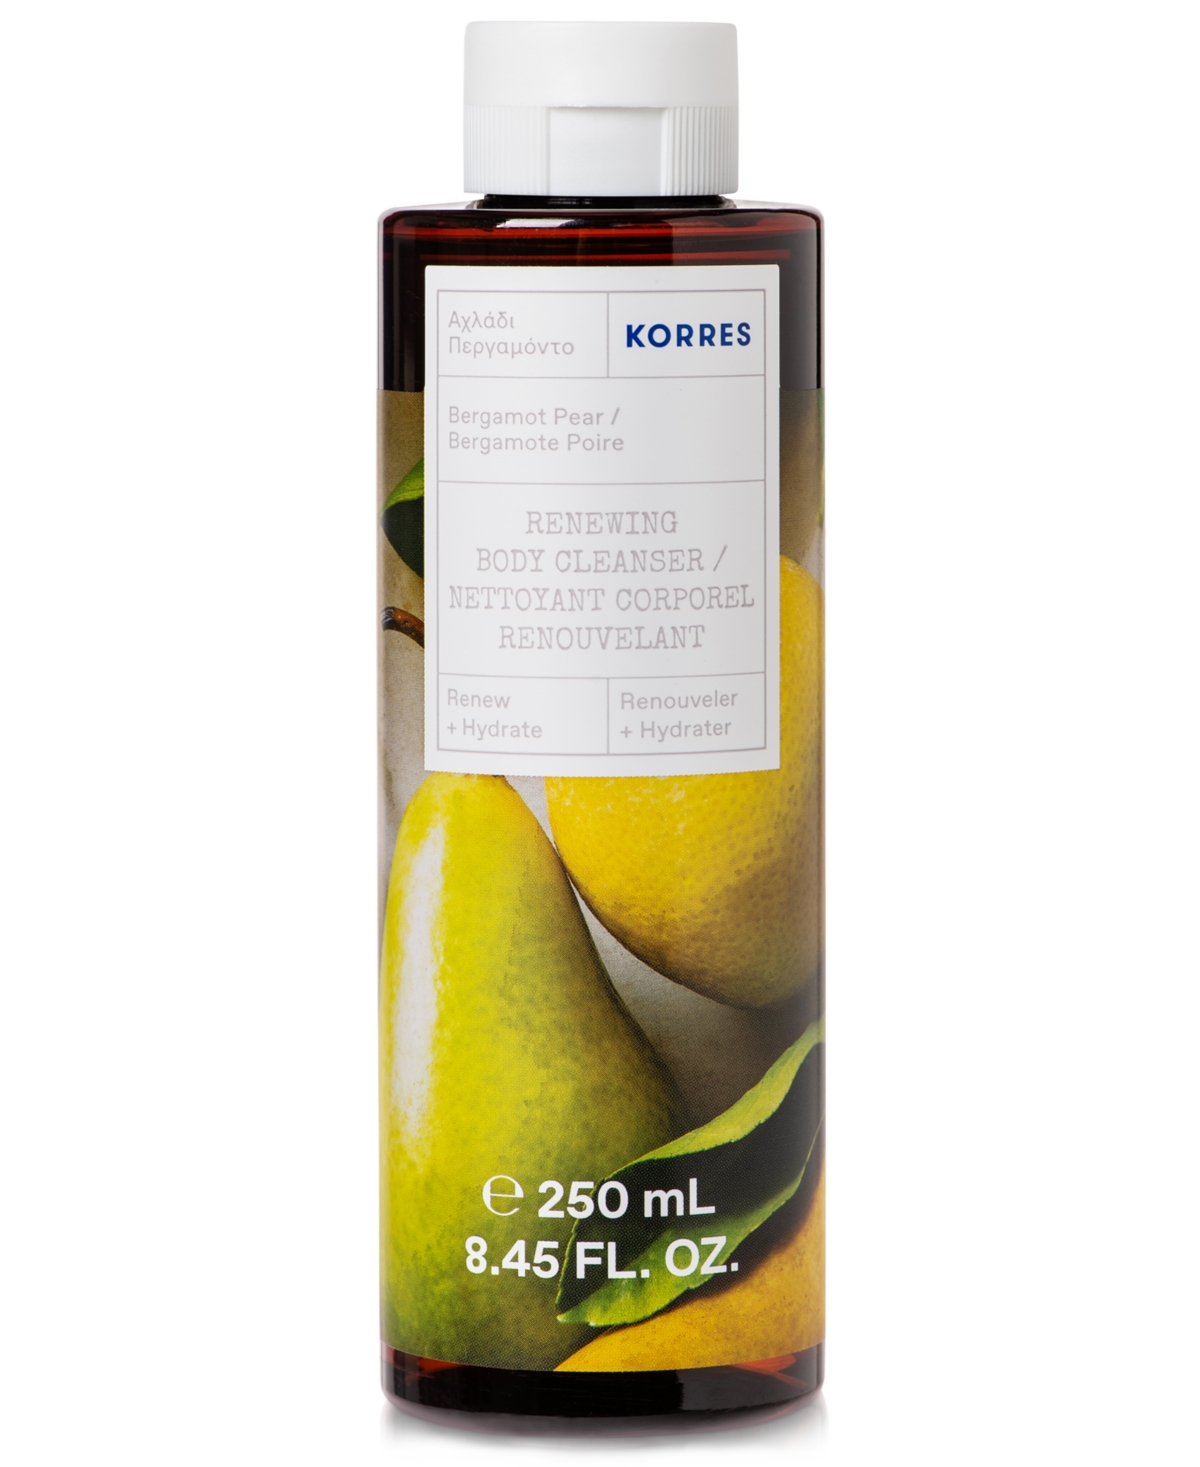 Korres Bergamot Pear Renewing Body Cleanser, 8.45-oz.